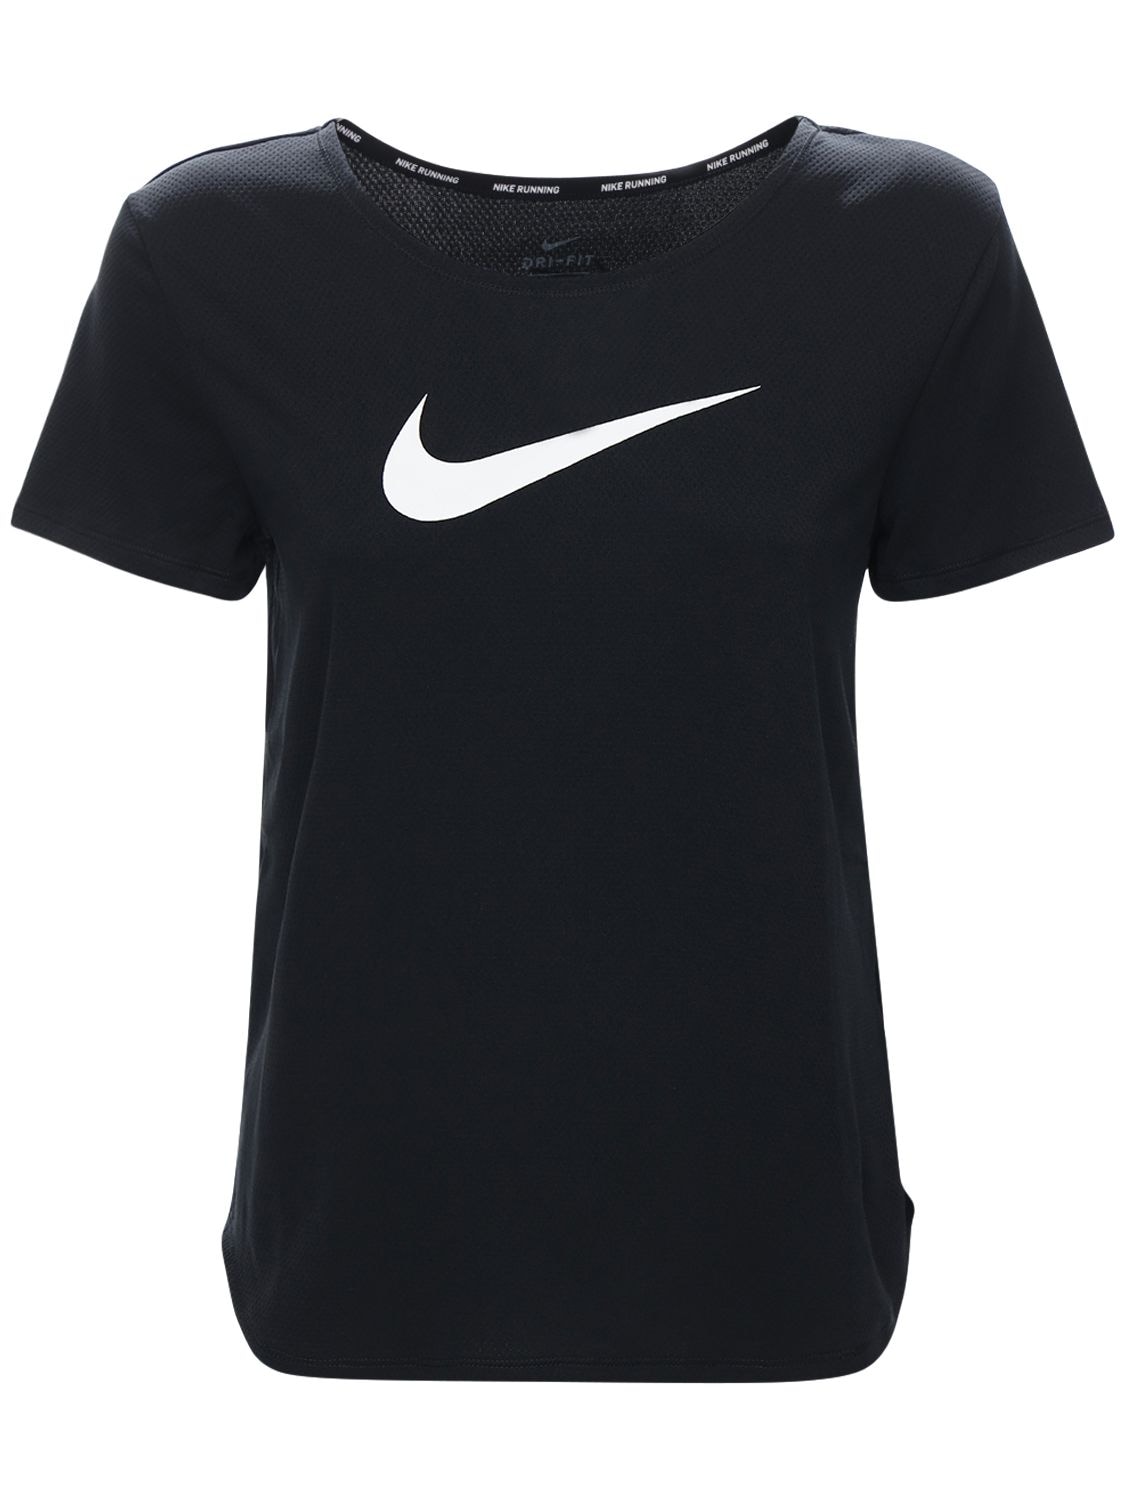 Nike Logo Print Tech Running T-shirt In Black